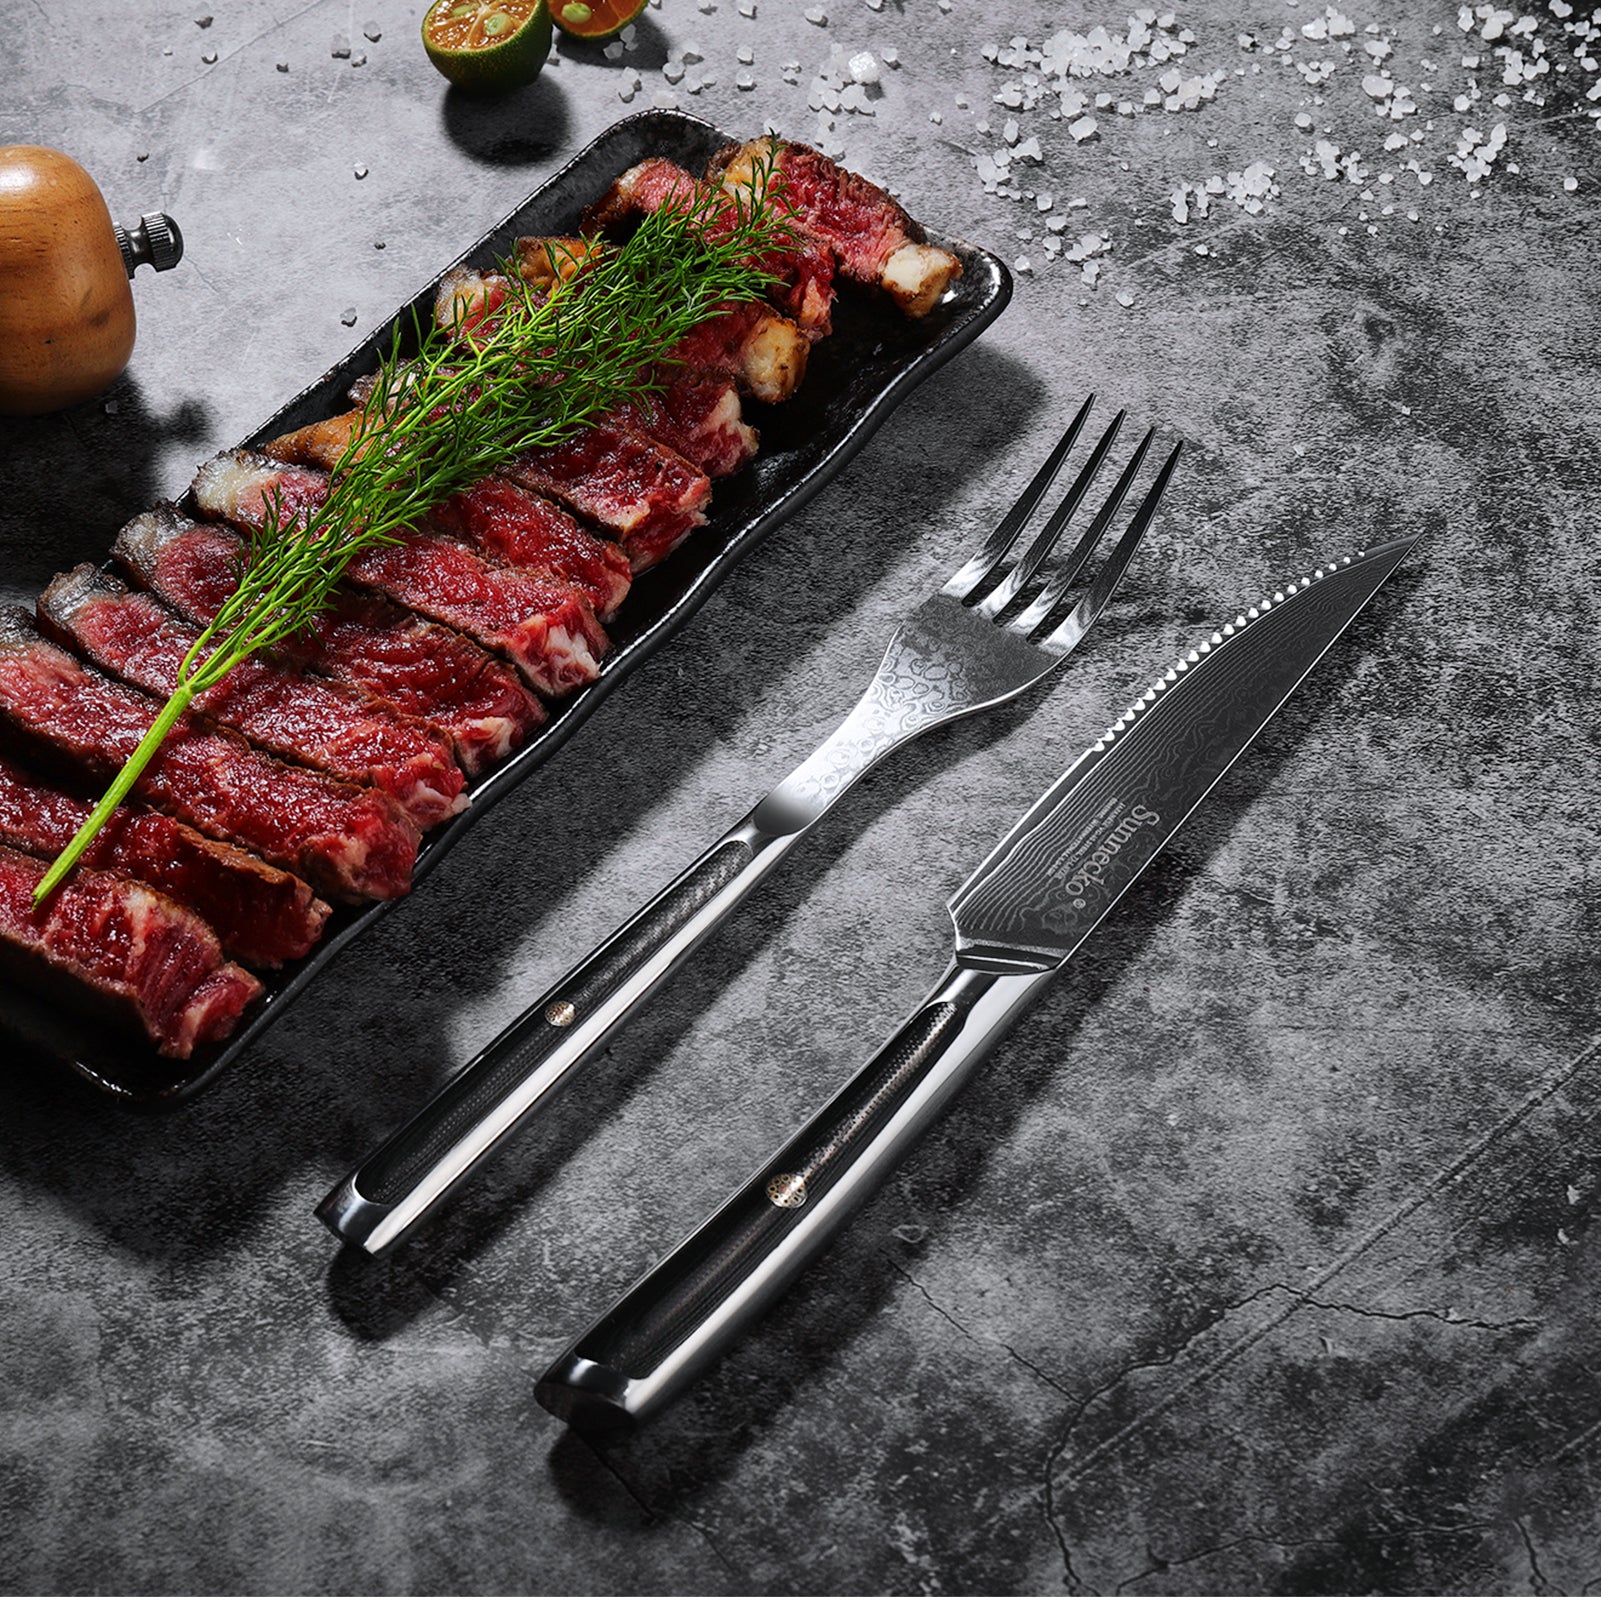 Damascus Cutlery】Damascus Steel 8pcs 5 Non Serrated Steak Knife